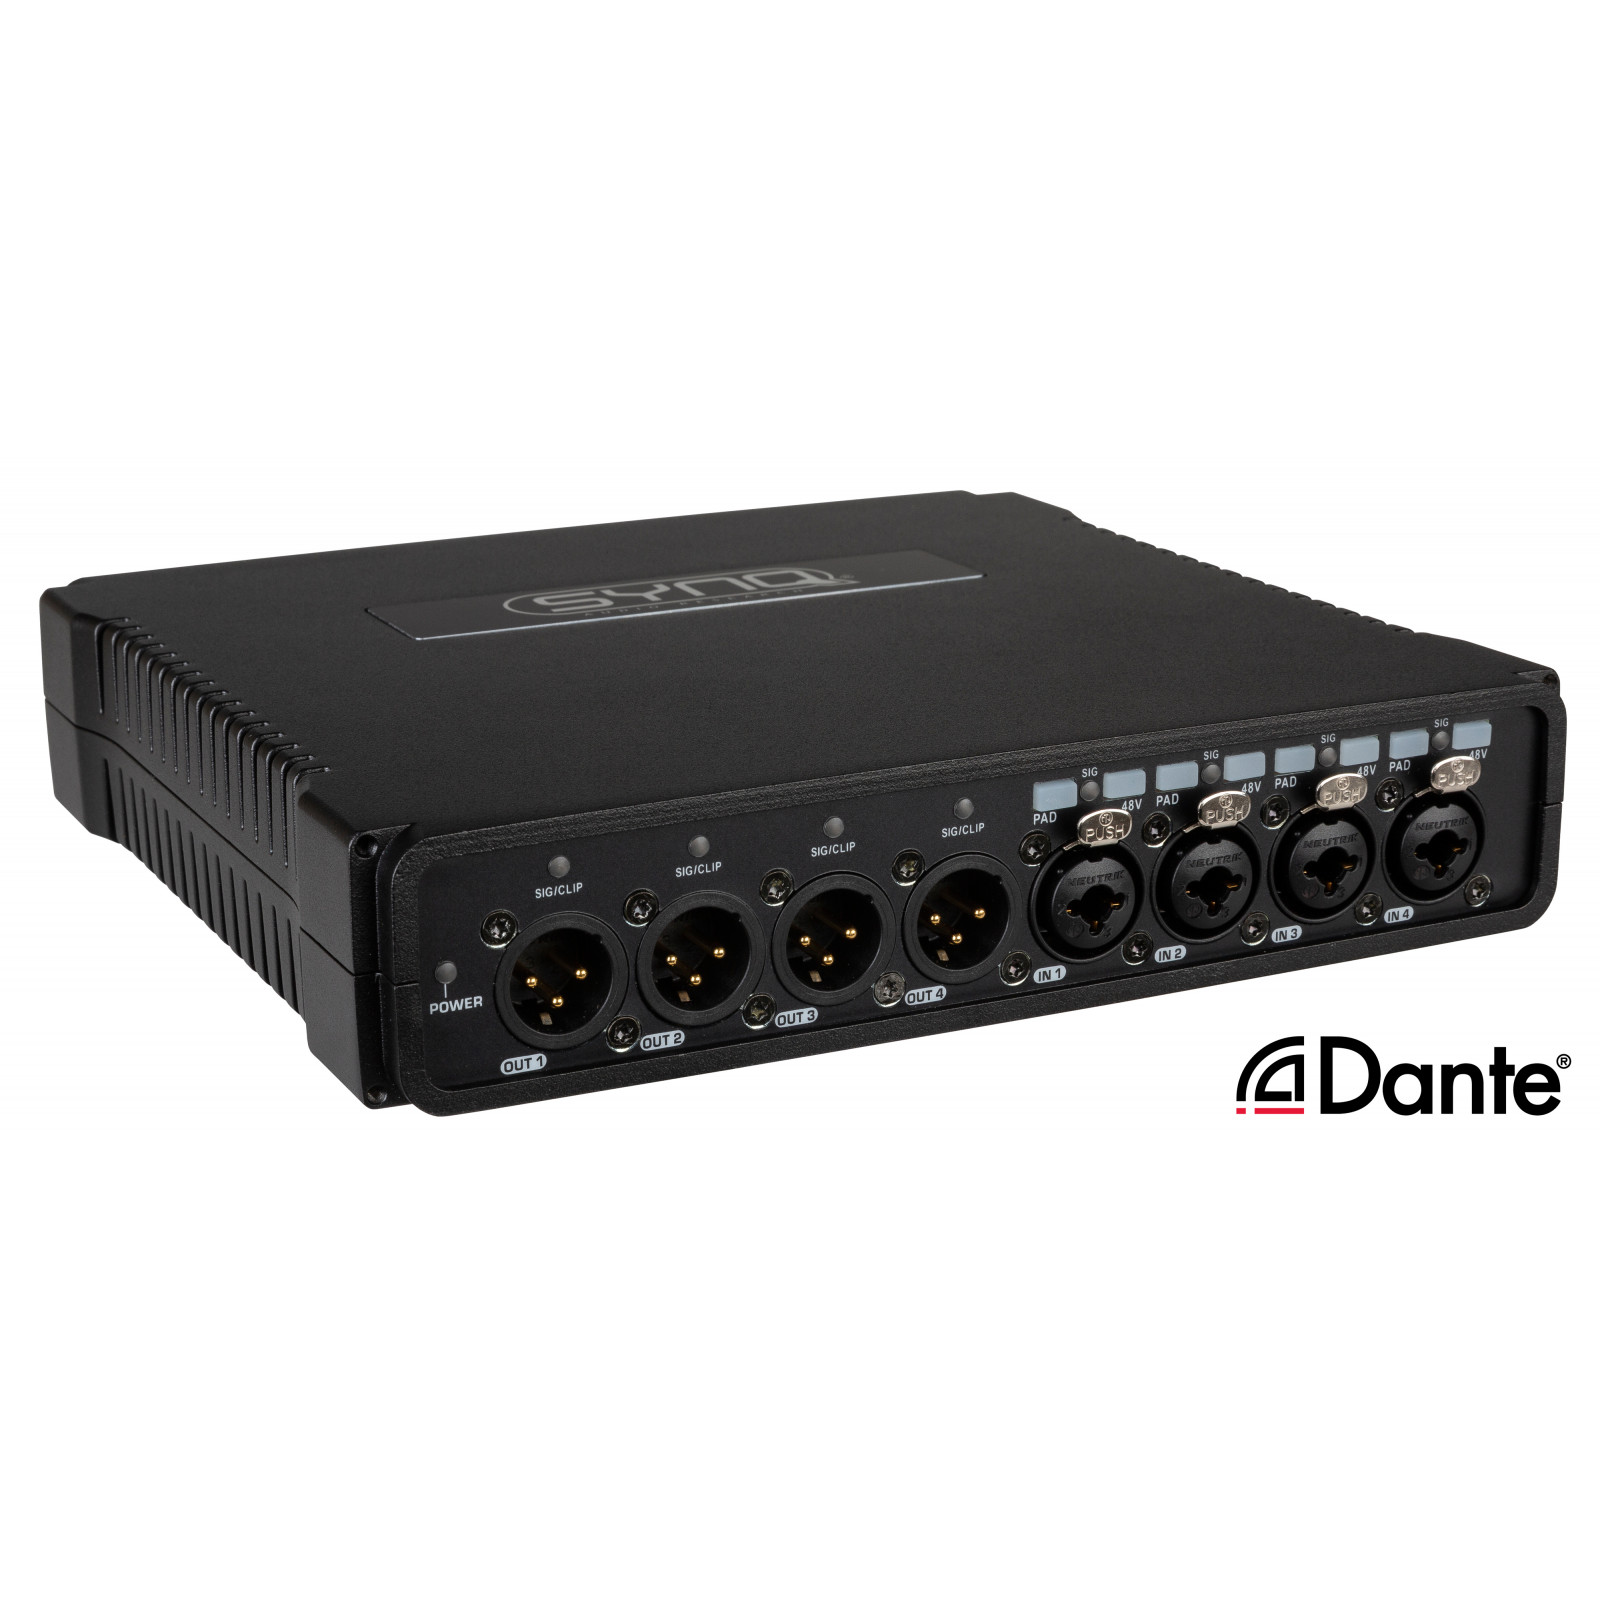 Synq DBT-44 Analog-/Dante-Netzwerk-Audio-Bridge